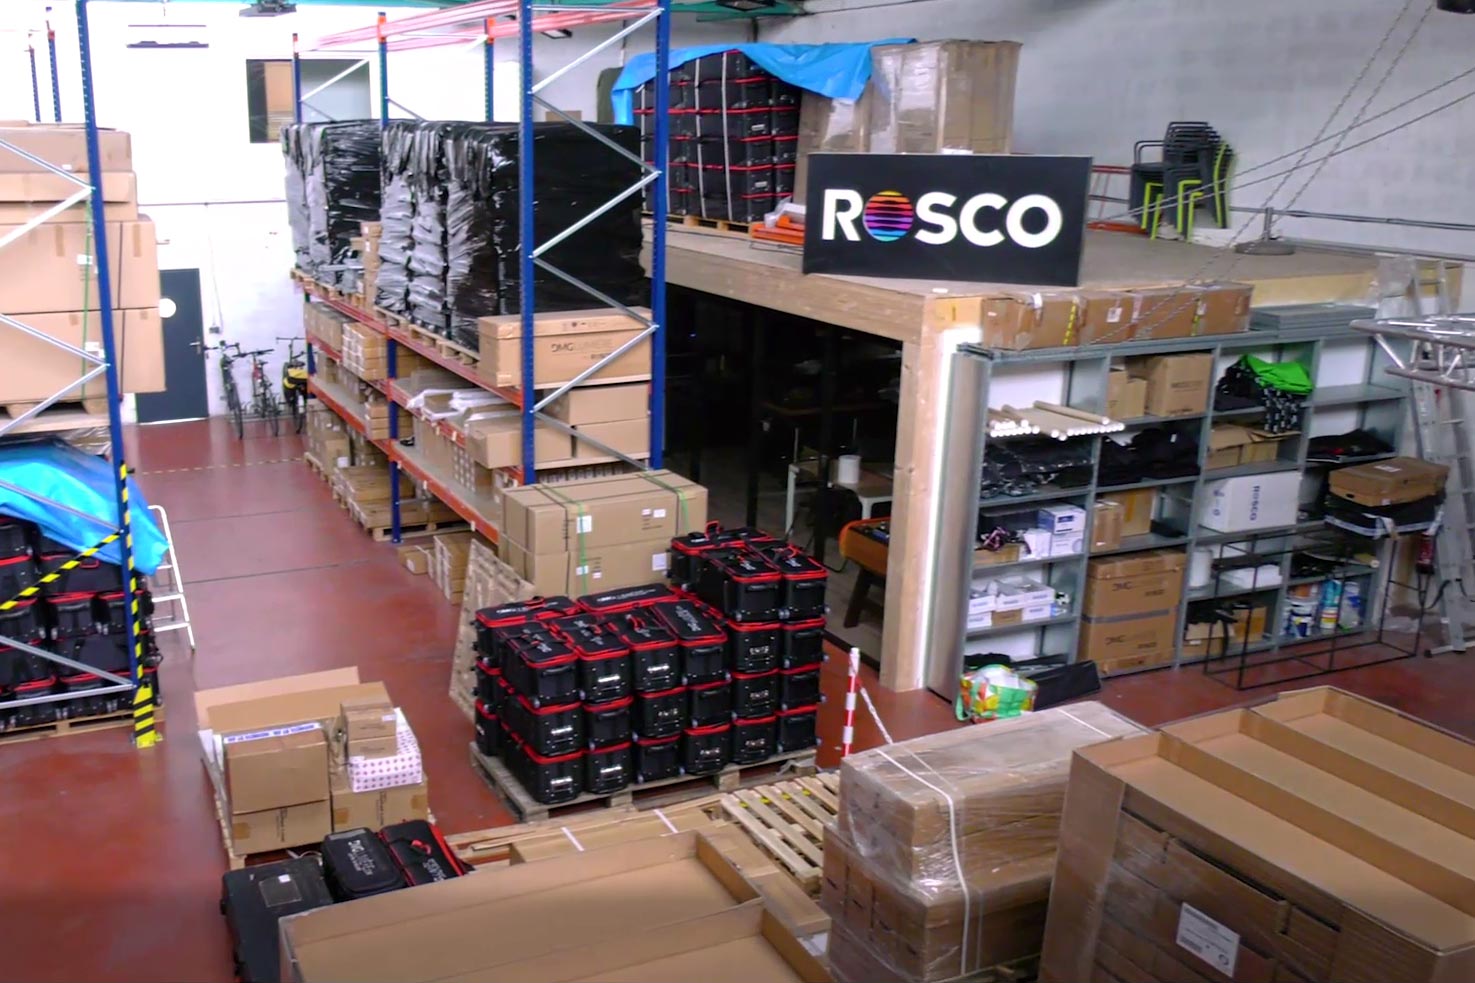 Rosco DMG Lumière warehouse in Villeurbanne (greater Lyon)